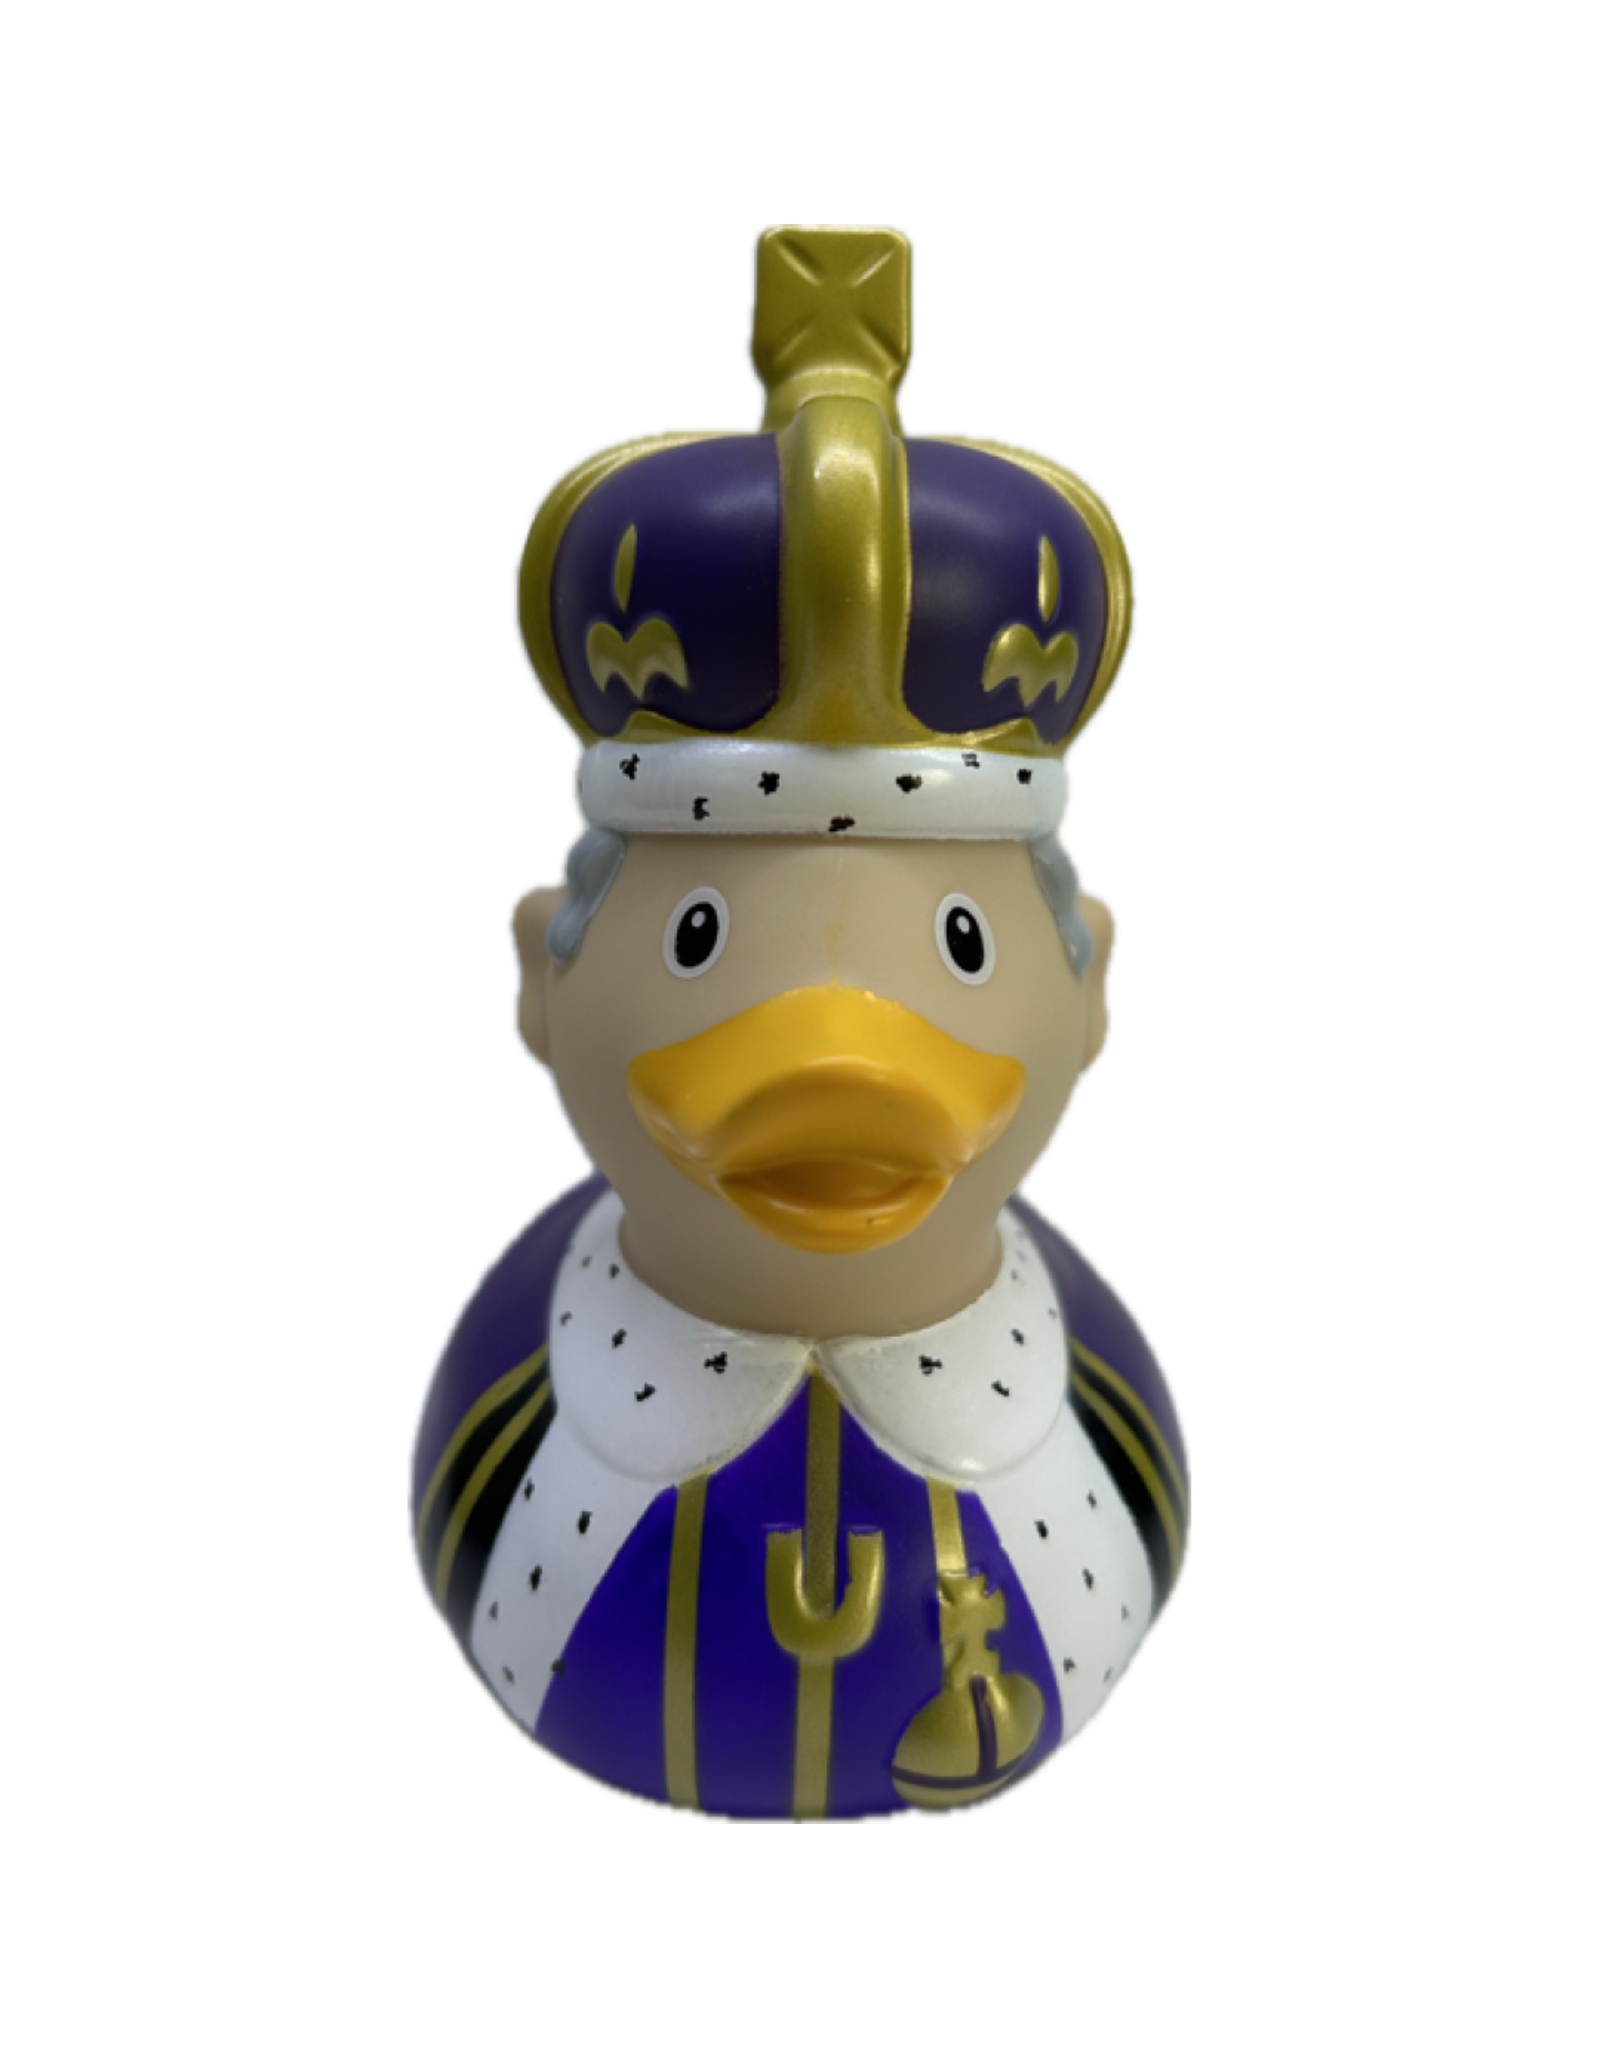 Regal King Rubber Duck